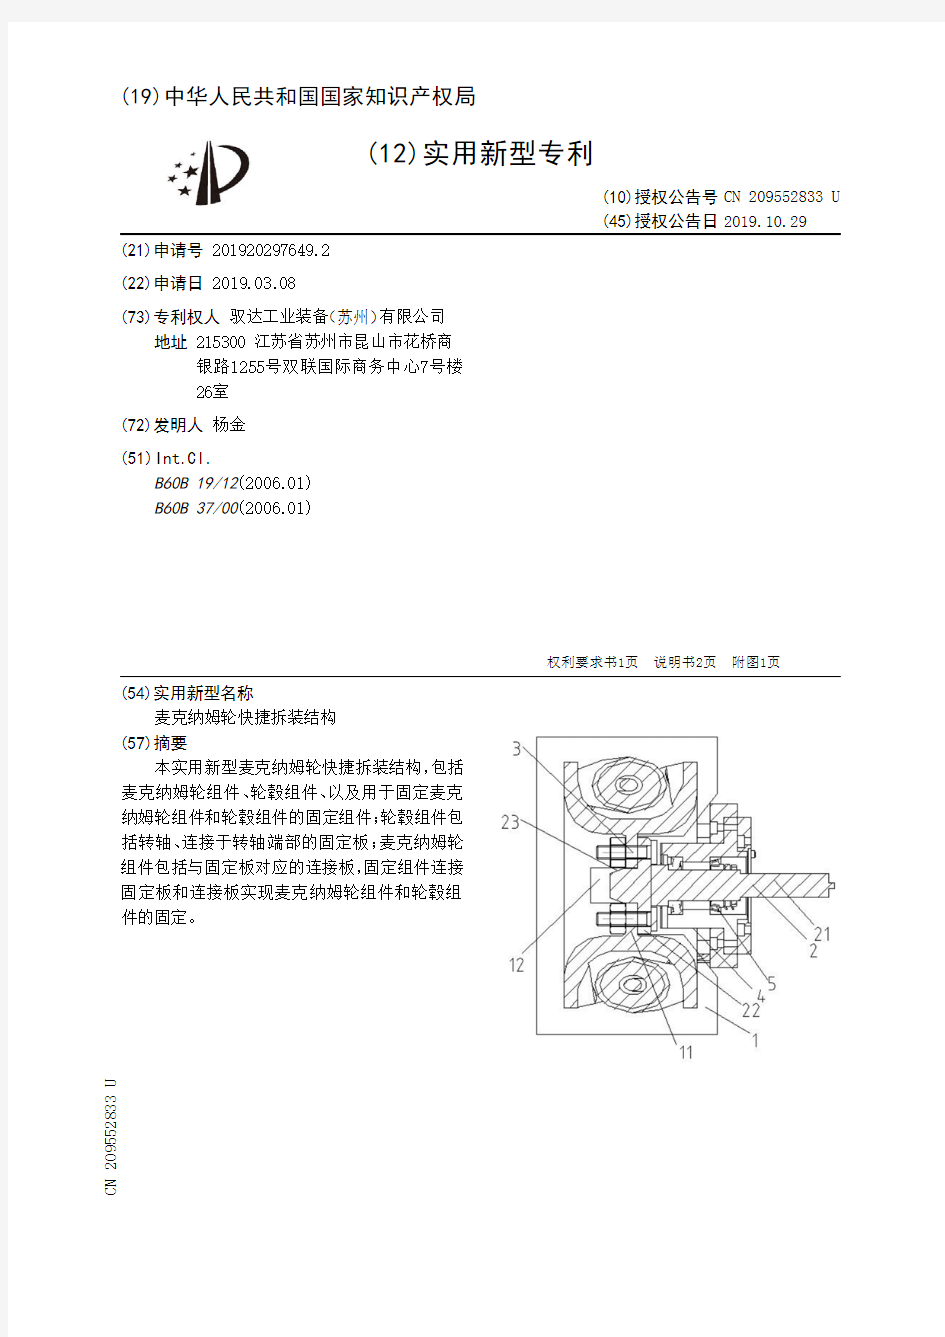 【CN209552833U】麦克纳姆轮快捷拆装结构【专利】